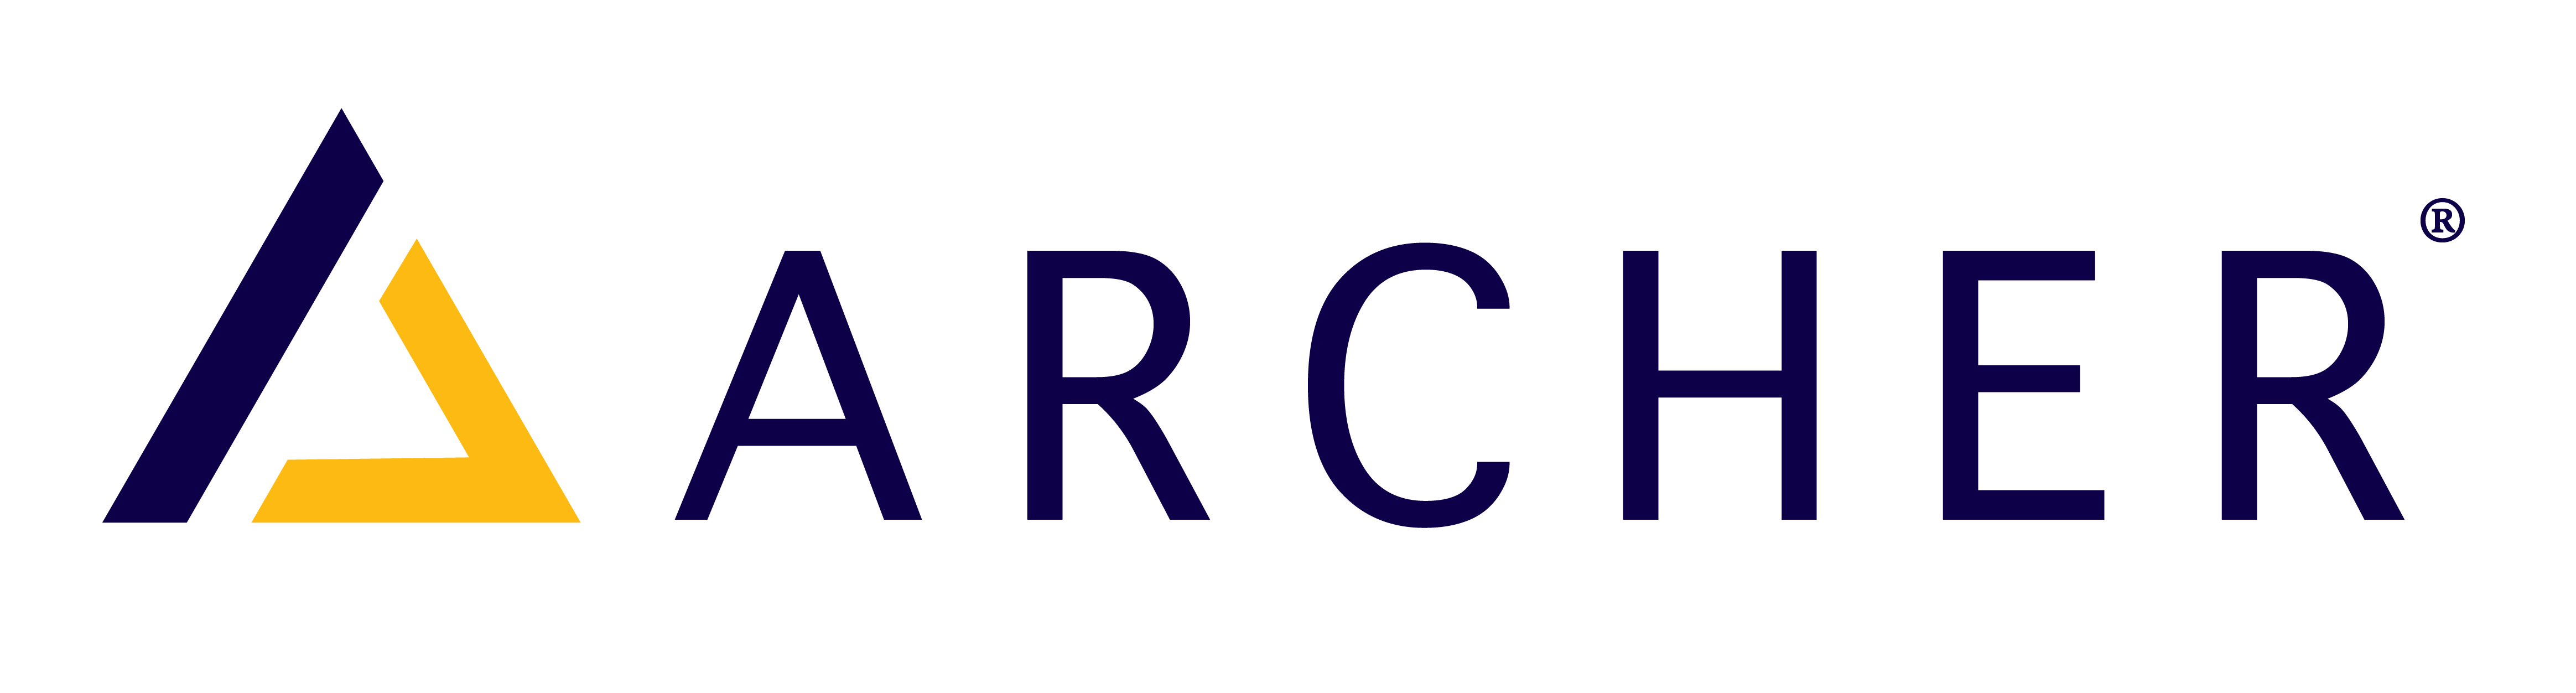 ARCHER Logo